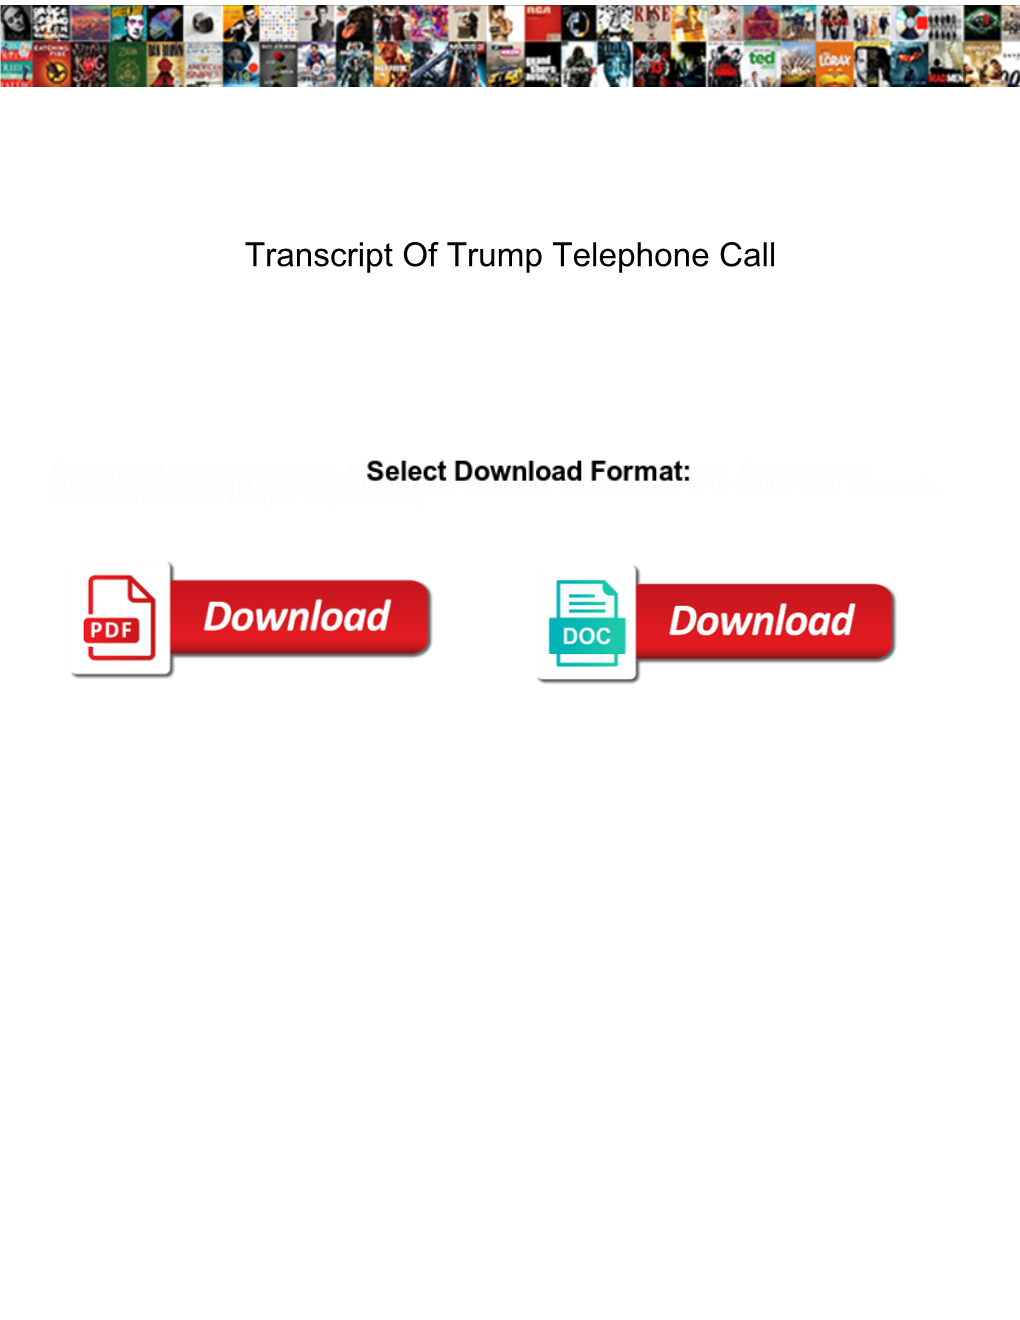 Transcript of Trump Telephone Call